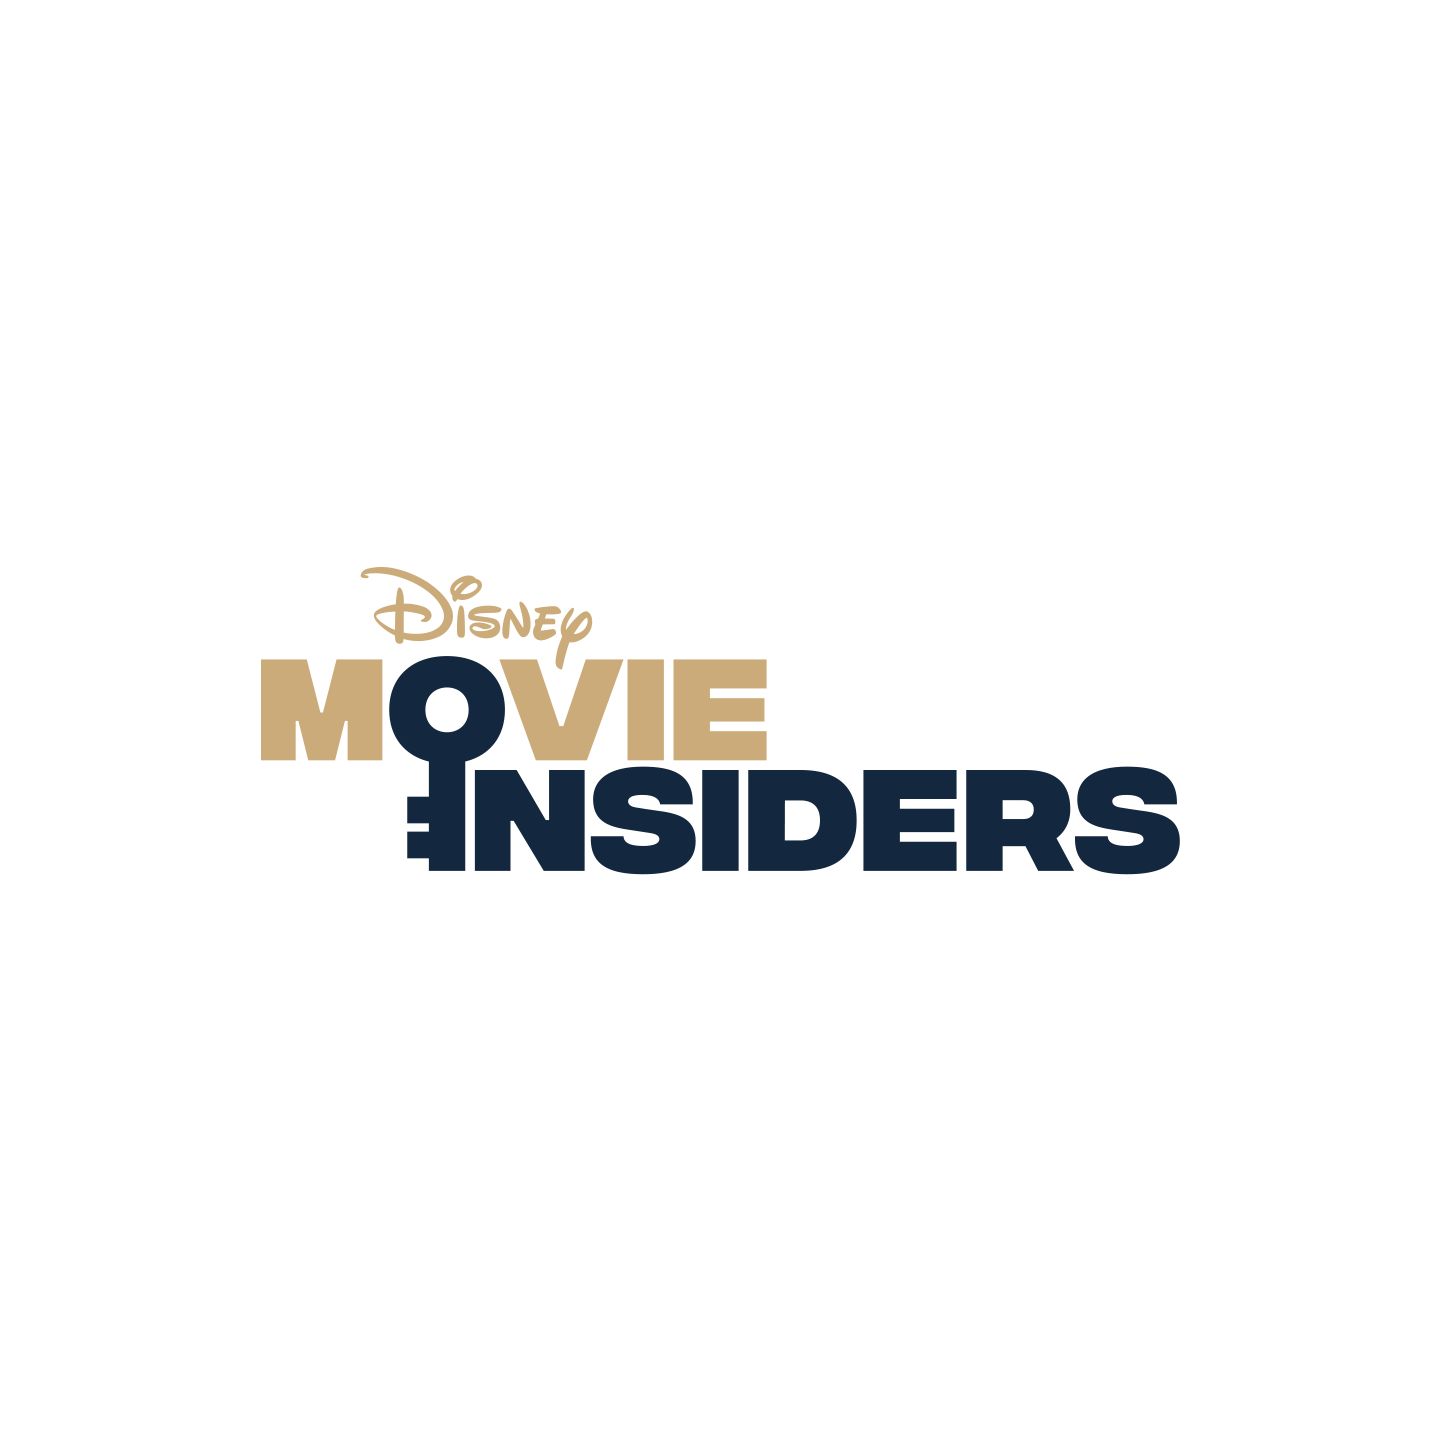 Disney Movie Insiders presents The Insider 5 featuring Tamron Hall | LISTEN NOW